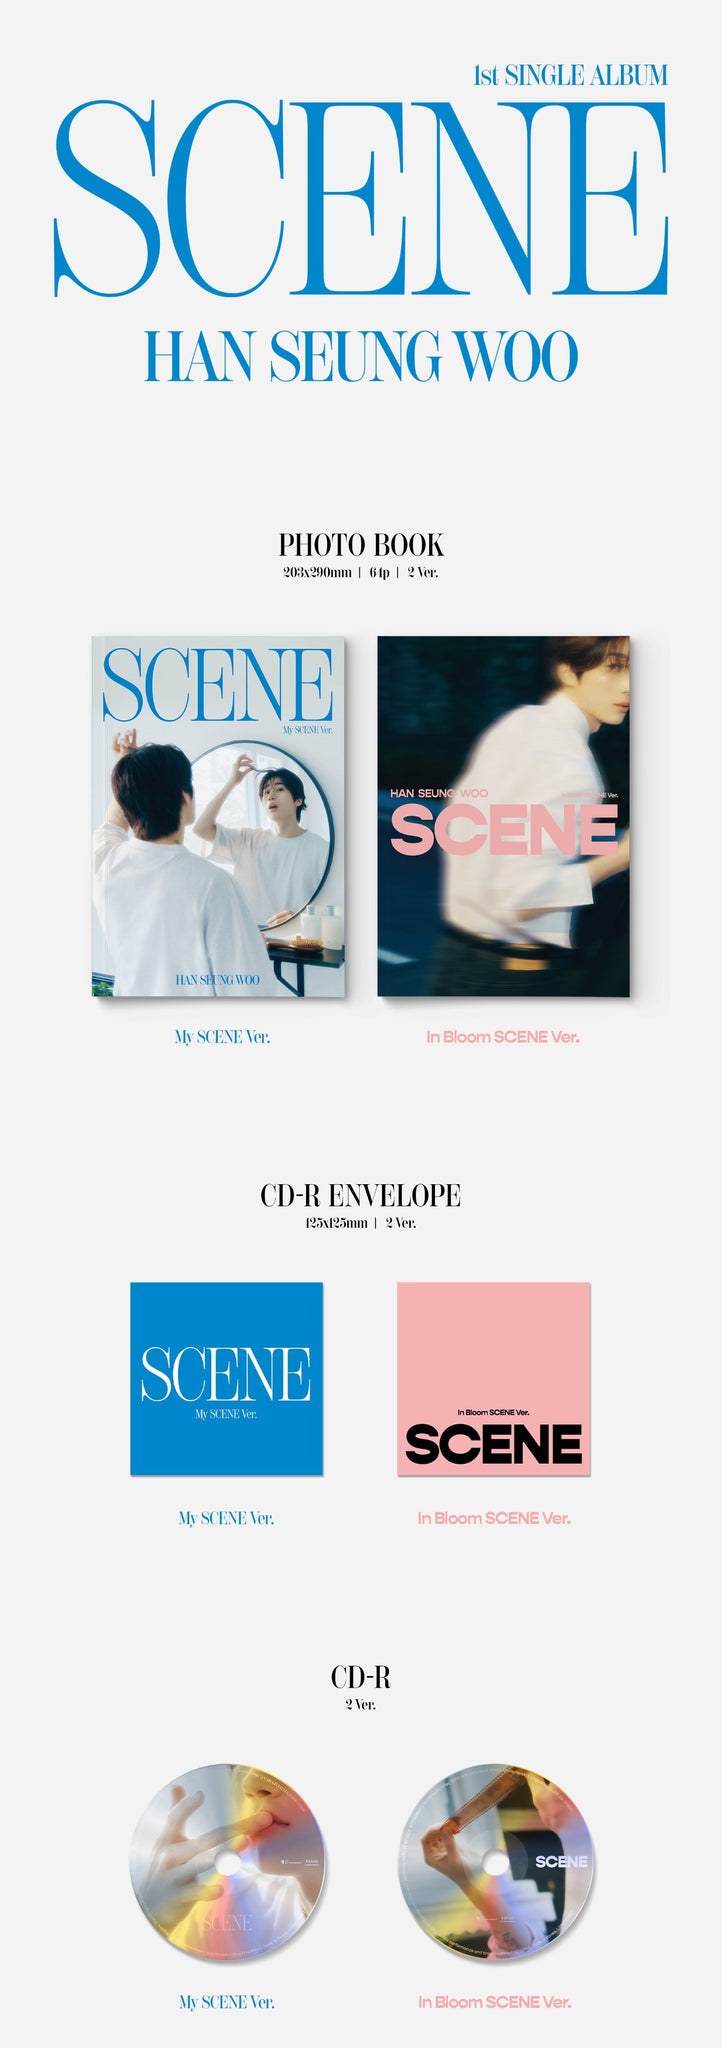 Han Seung Woo 1st Single Album SCENE Inclusions: Photobook, CD & Envelope